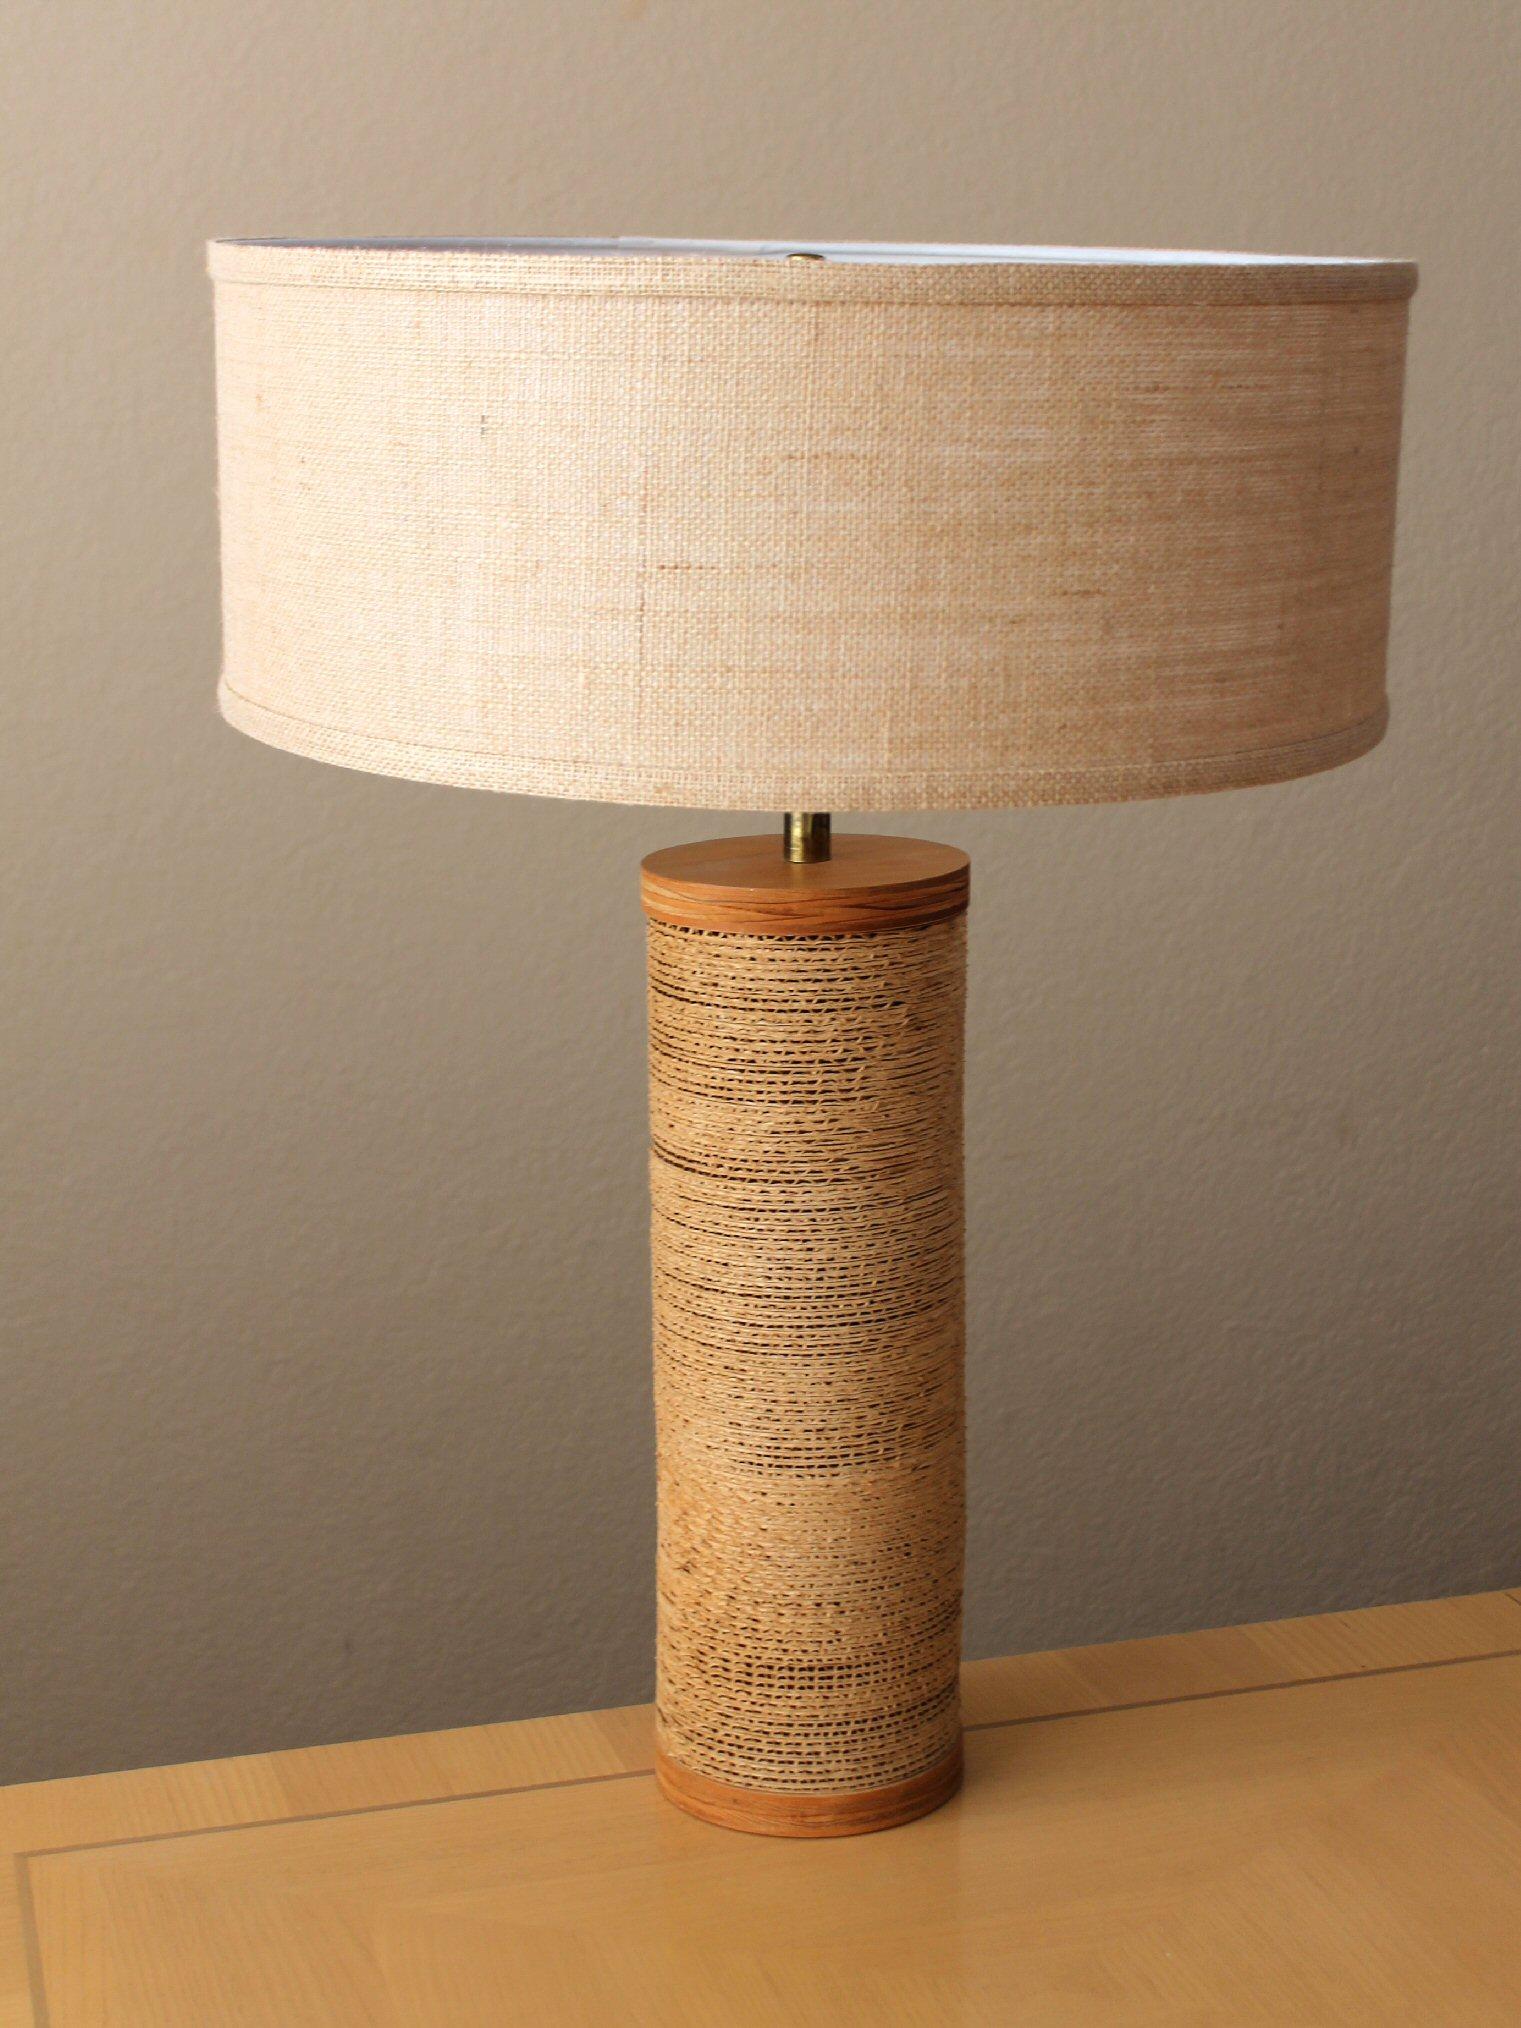 Mid-Century Modern Lampe de table emblématique Gregory Van Pelt Cardboard, moderne du milieu du siècle dernier Design/One en vente